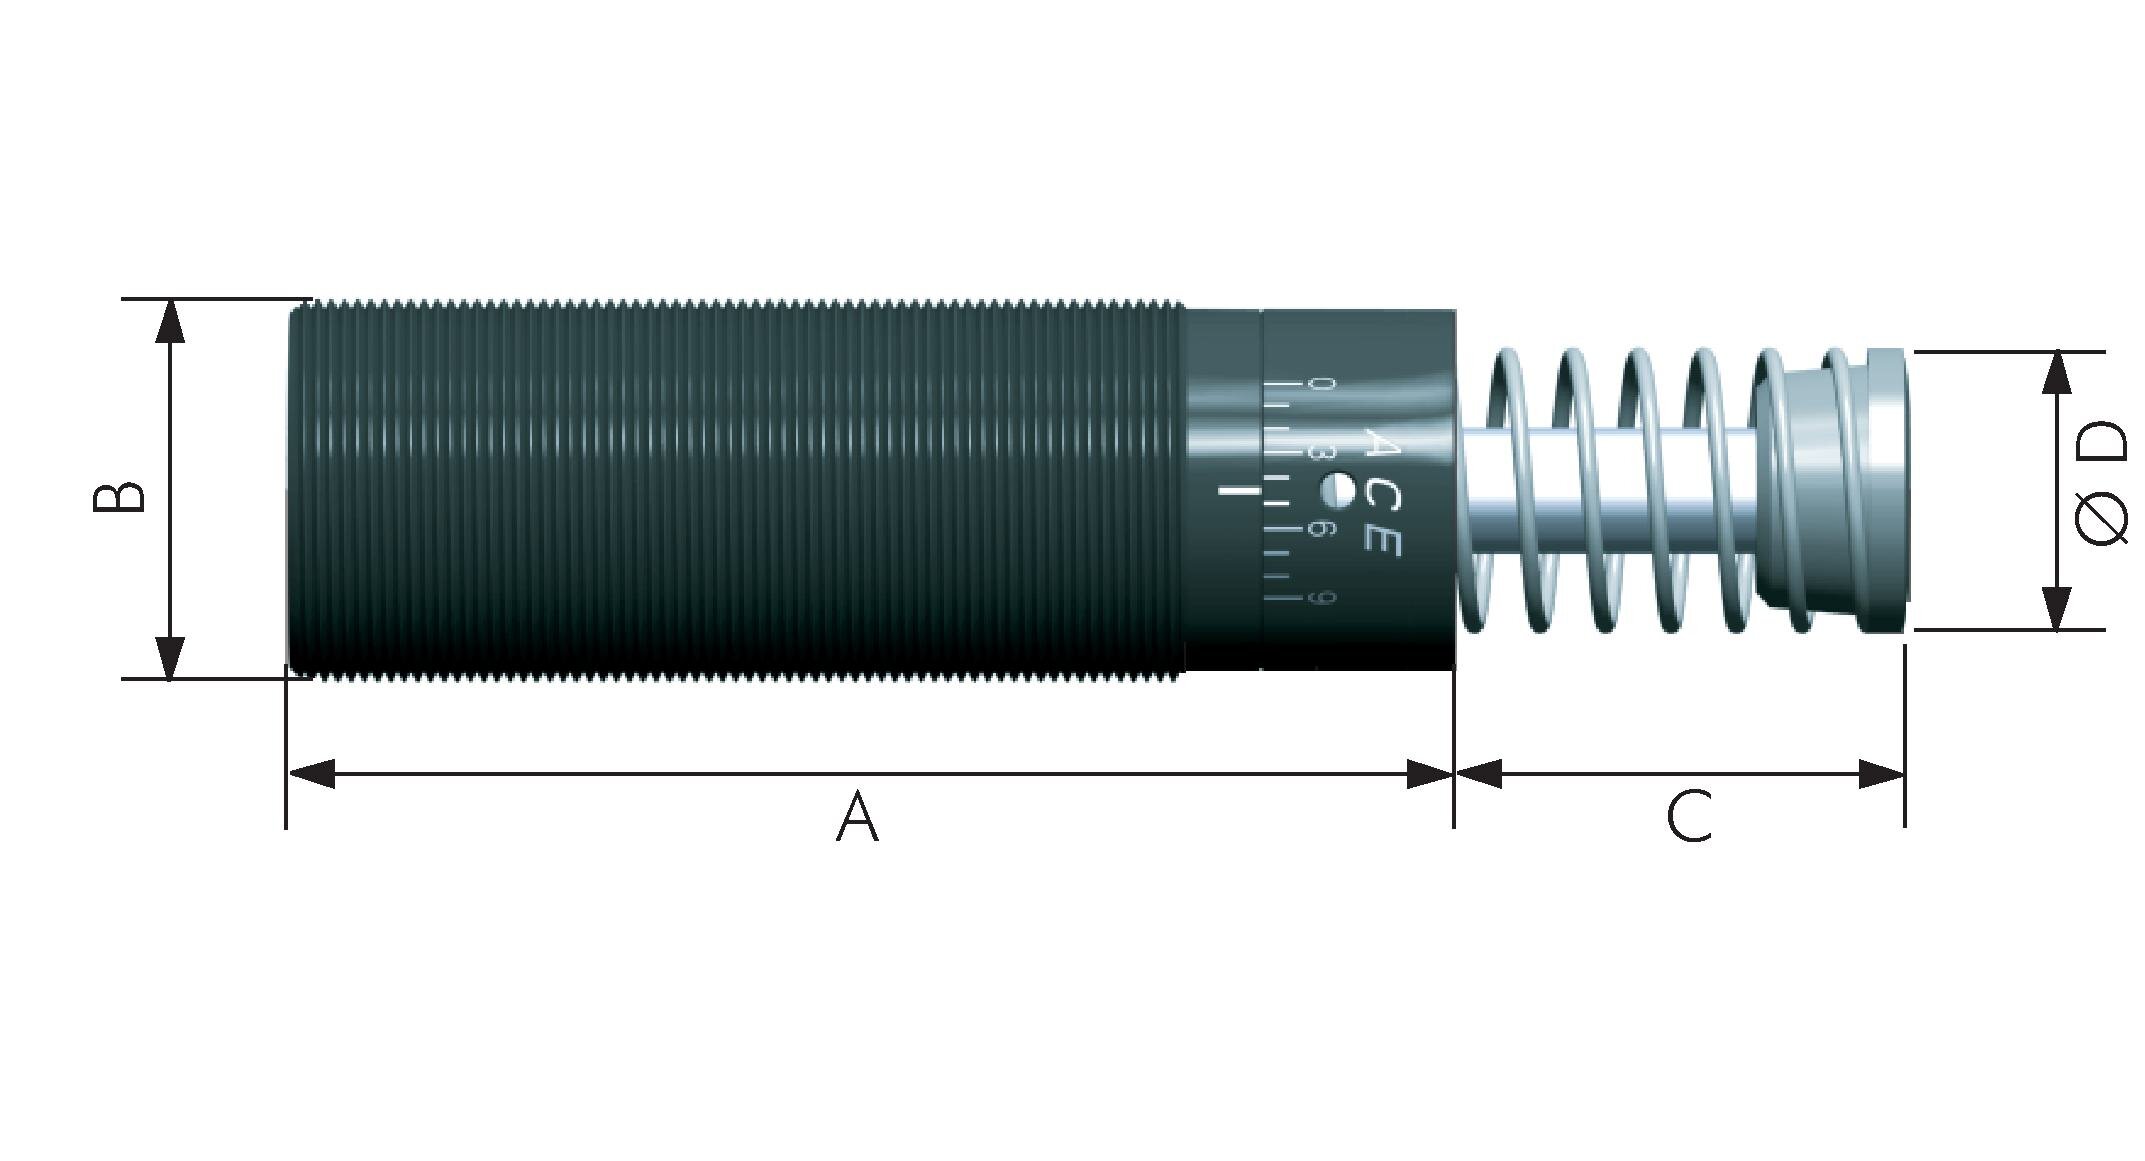 ACE ACE-Stoßdämpfer, M 33x1,5, Hub 50 mm, Standard, einstellbar (MA3350EUM)  - Landefeld - Pneumatik - Hydraulik - Industriebedarf